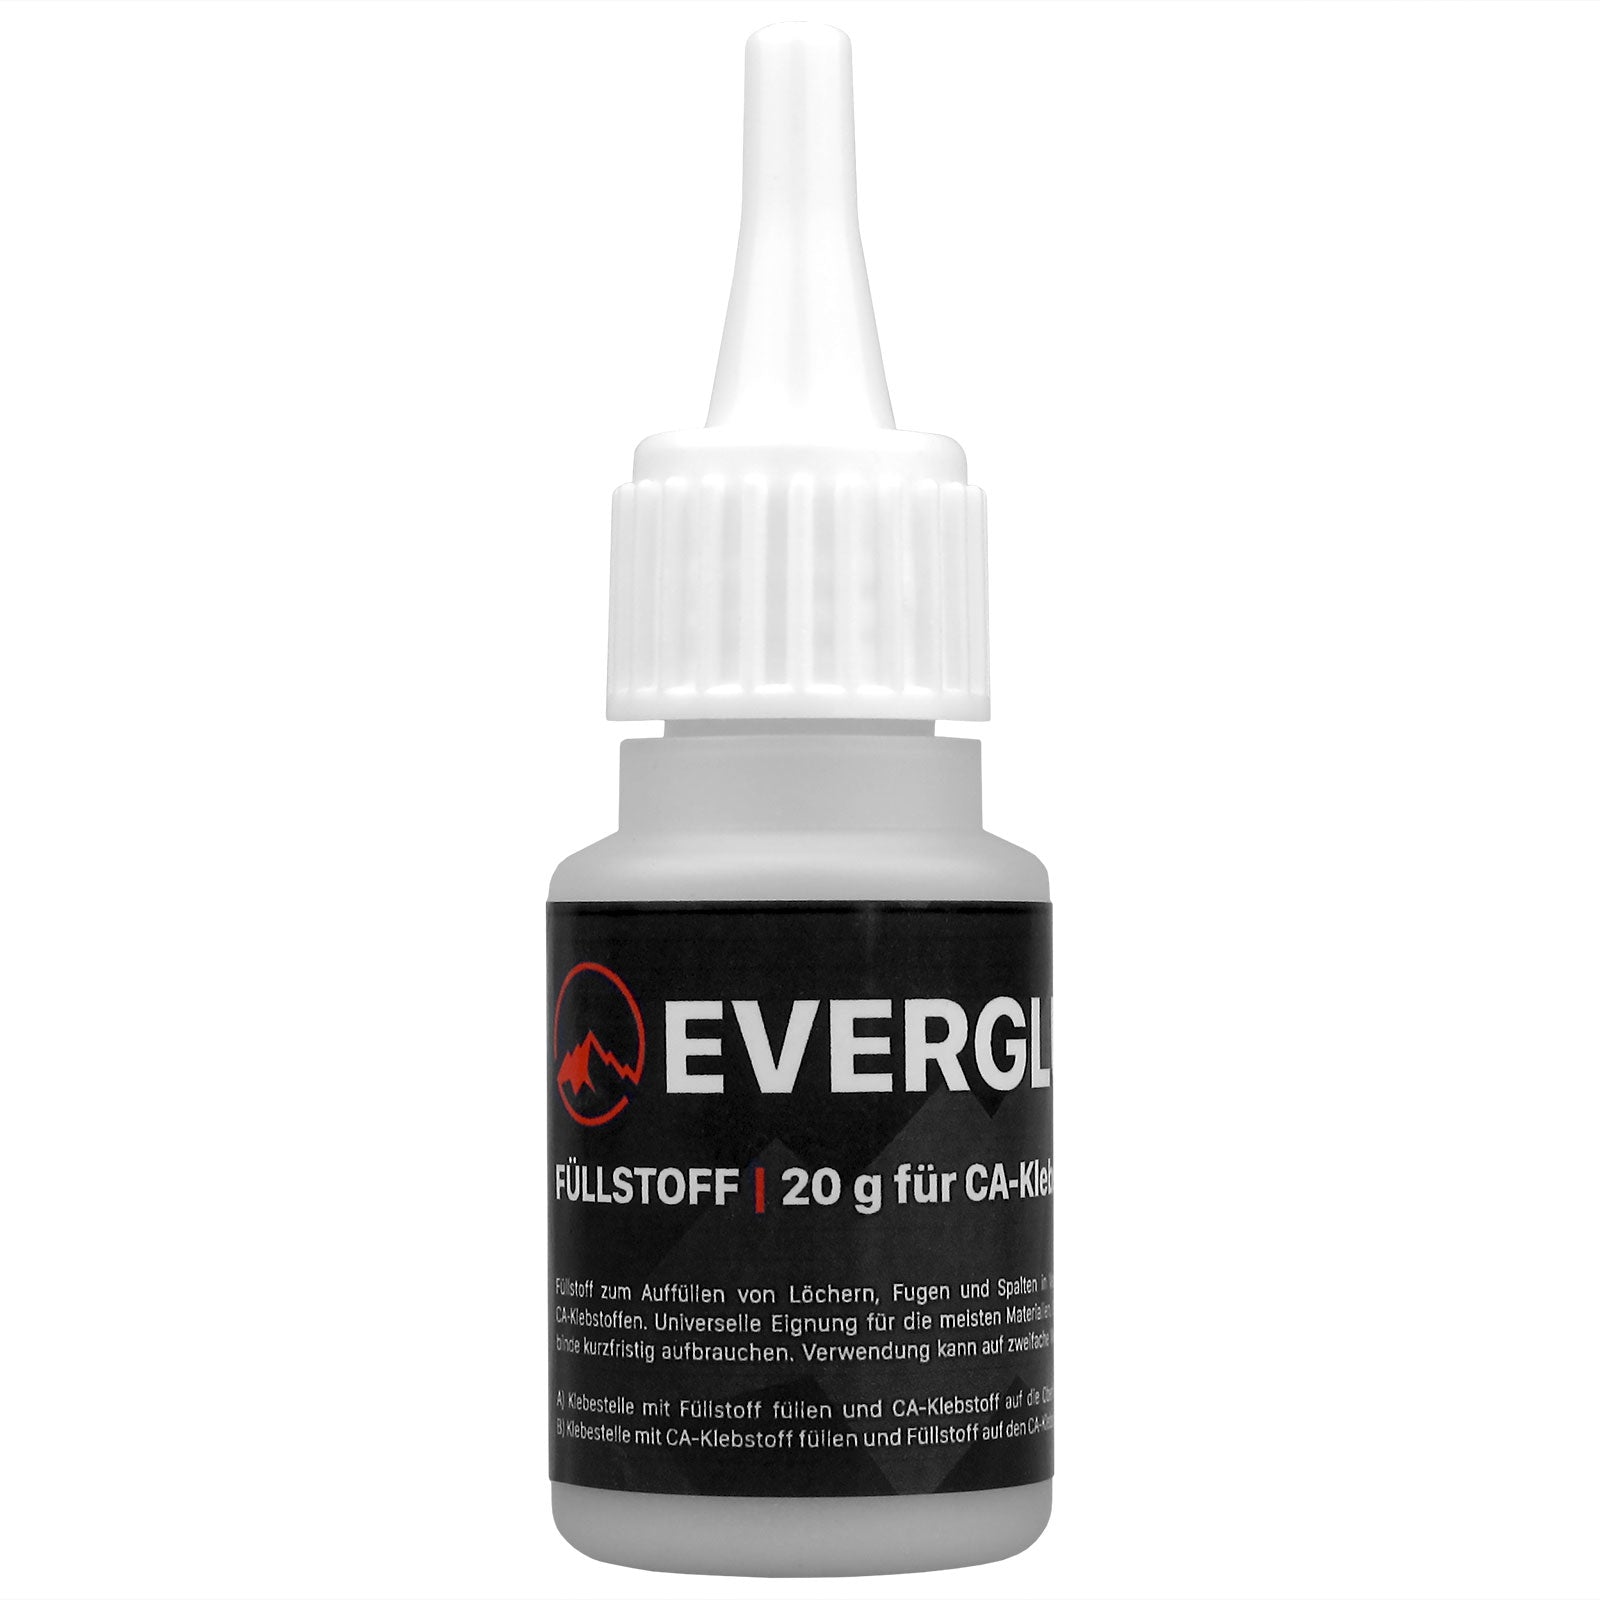 Everglue high acryllic super glue 20g